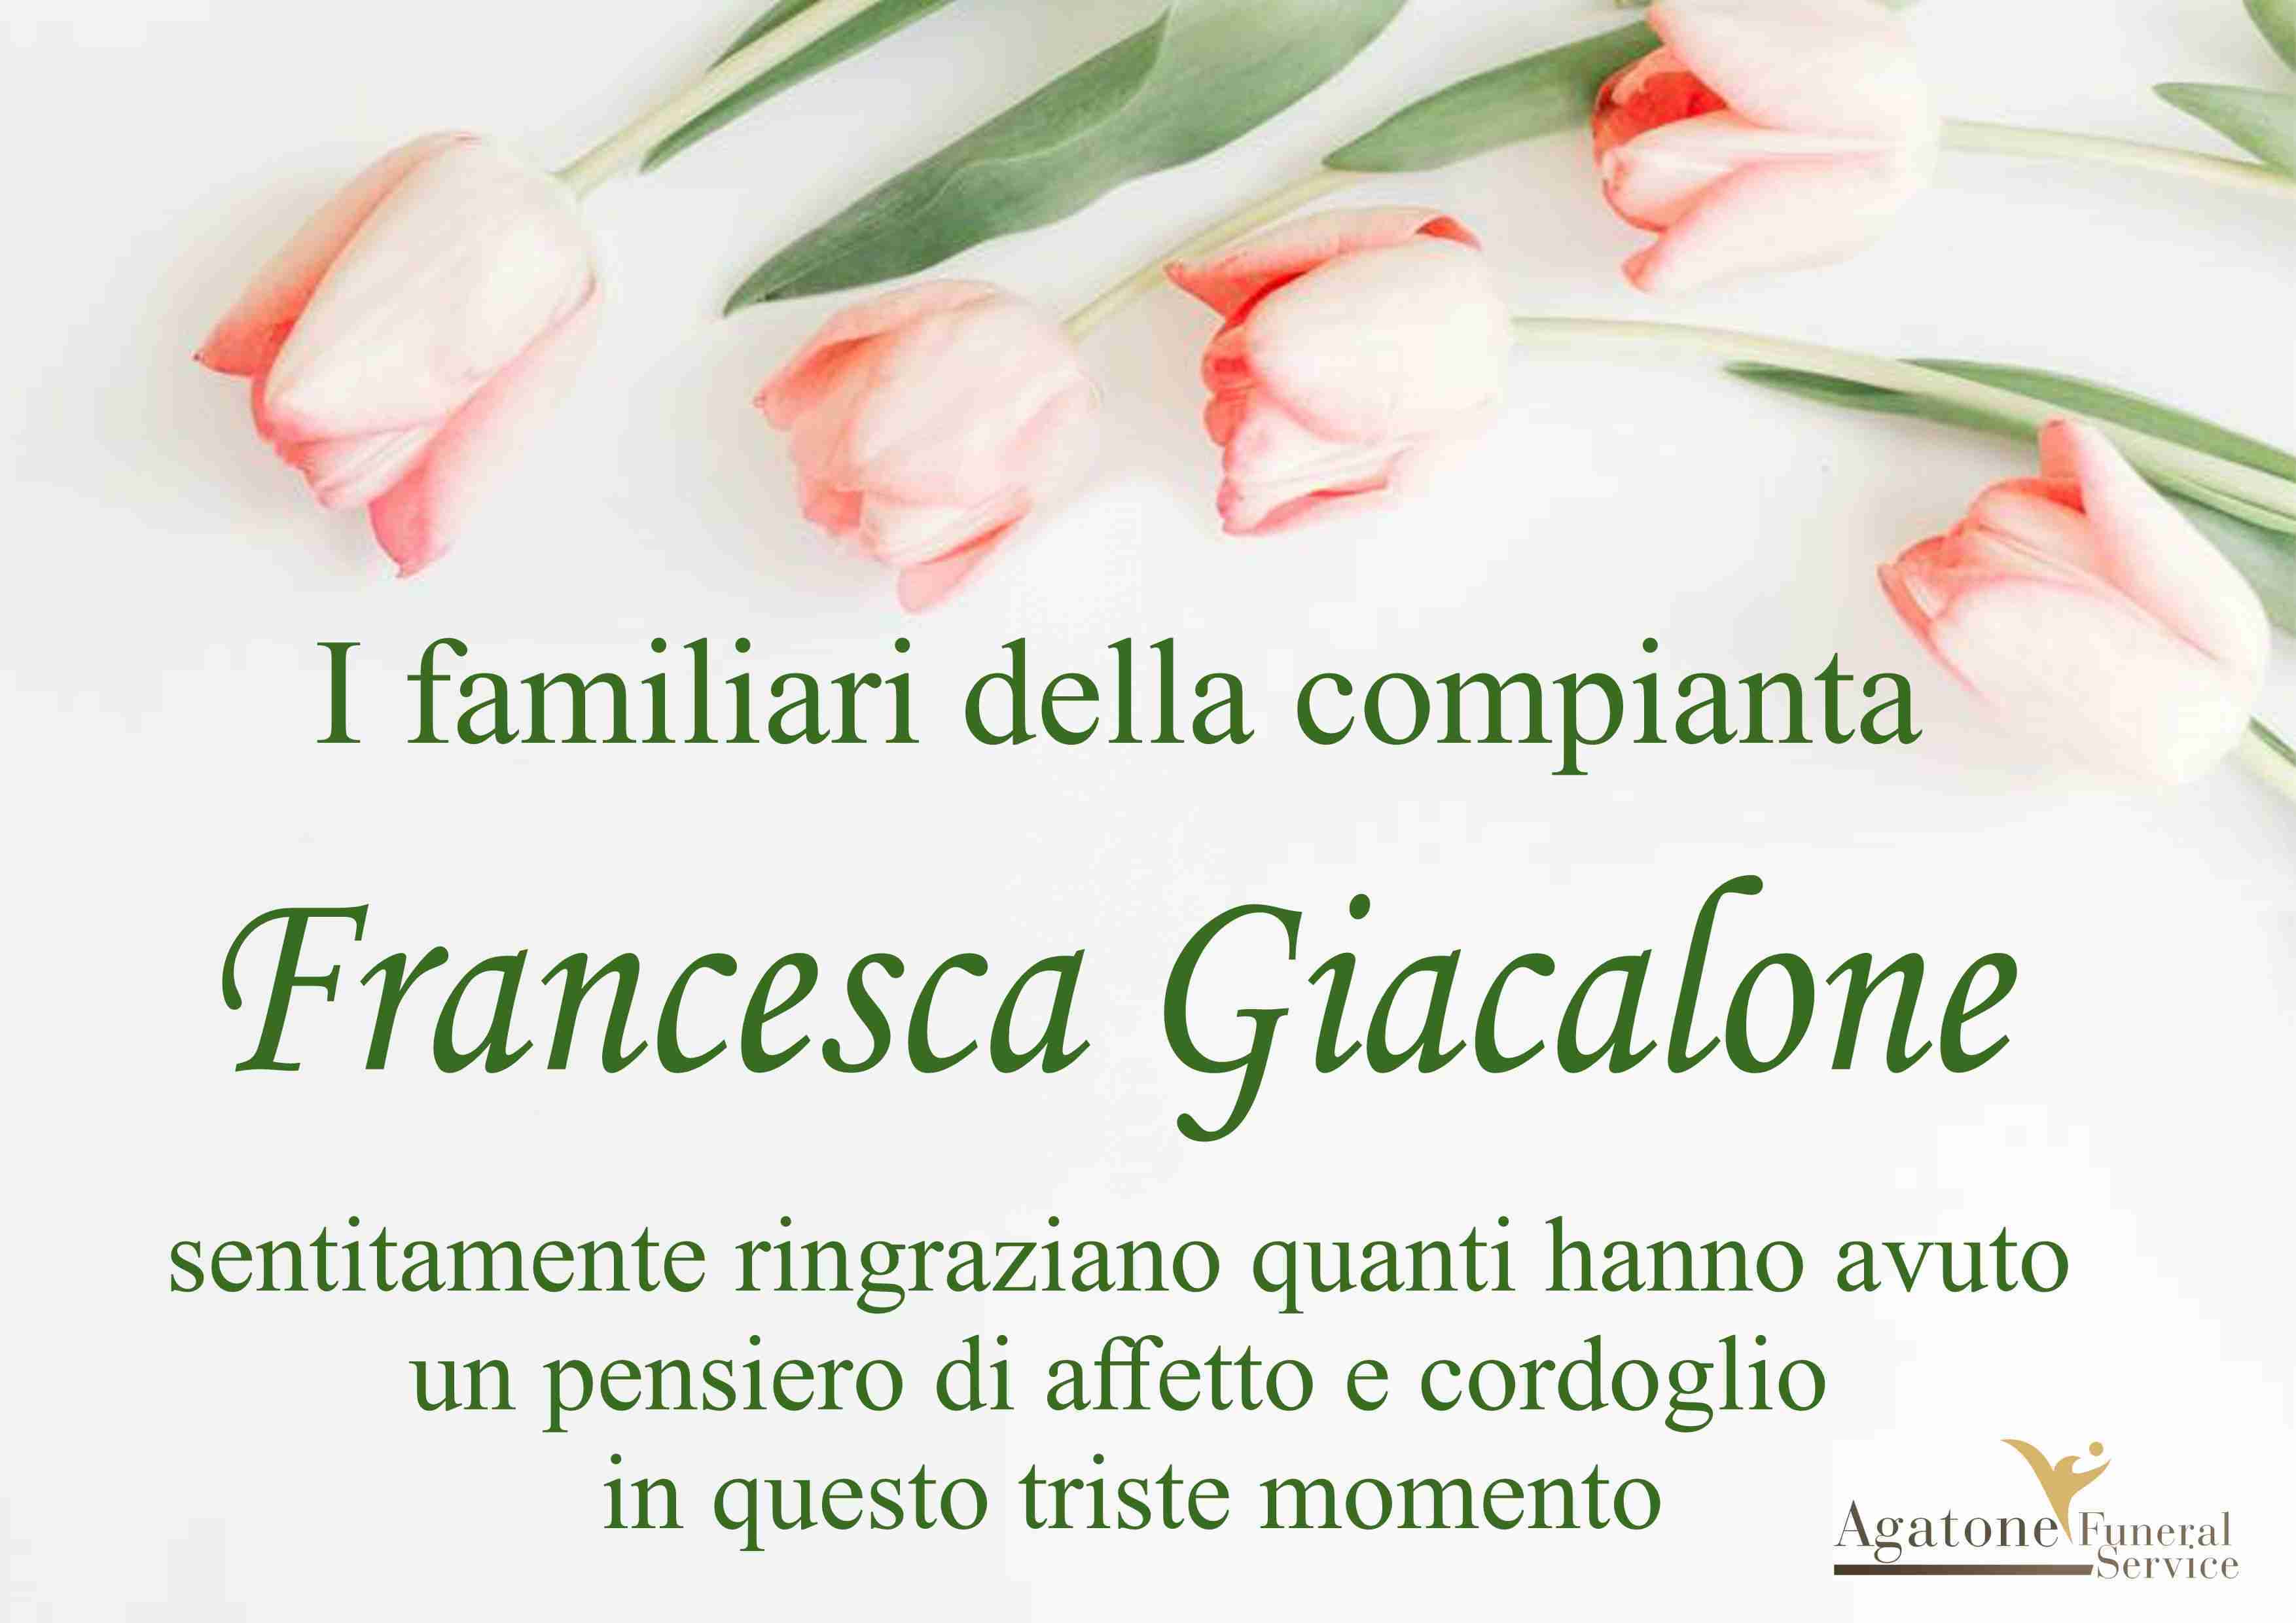 Francesca Giacalone